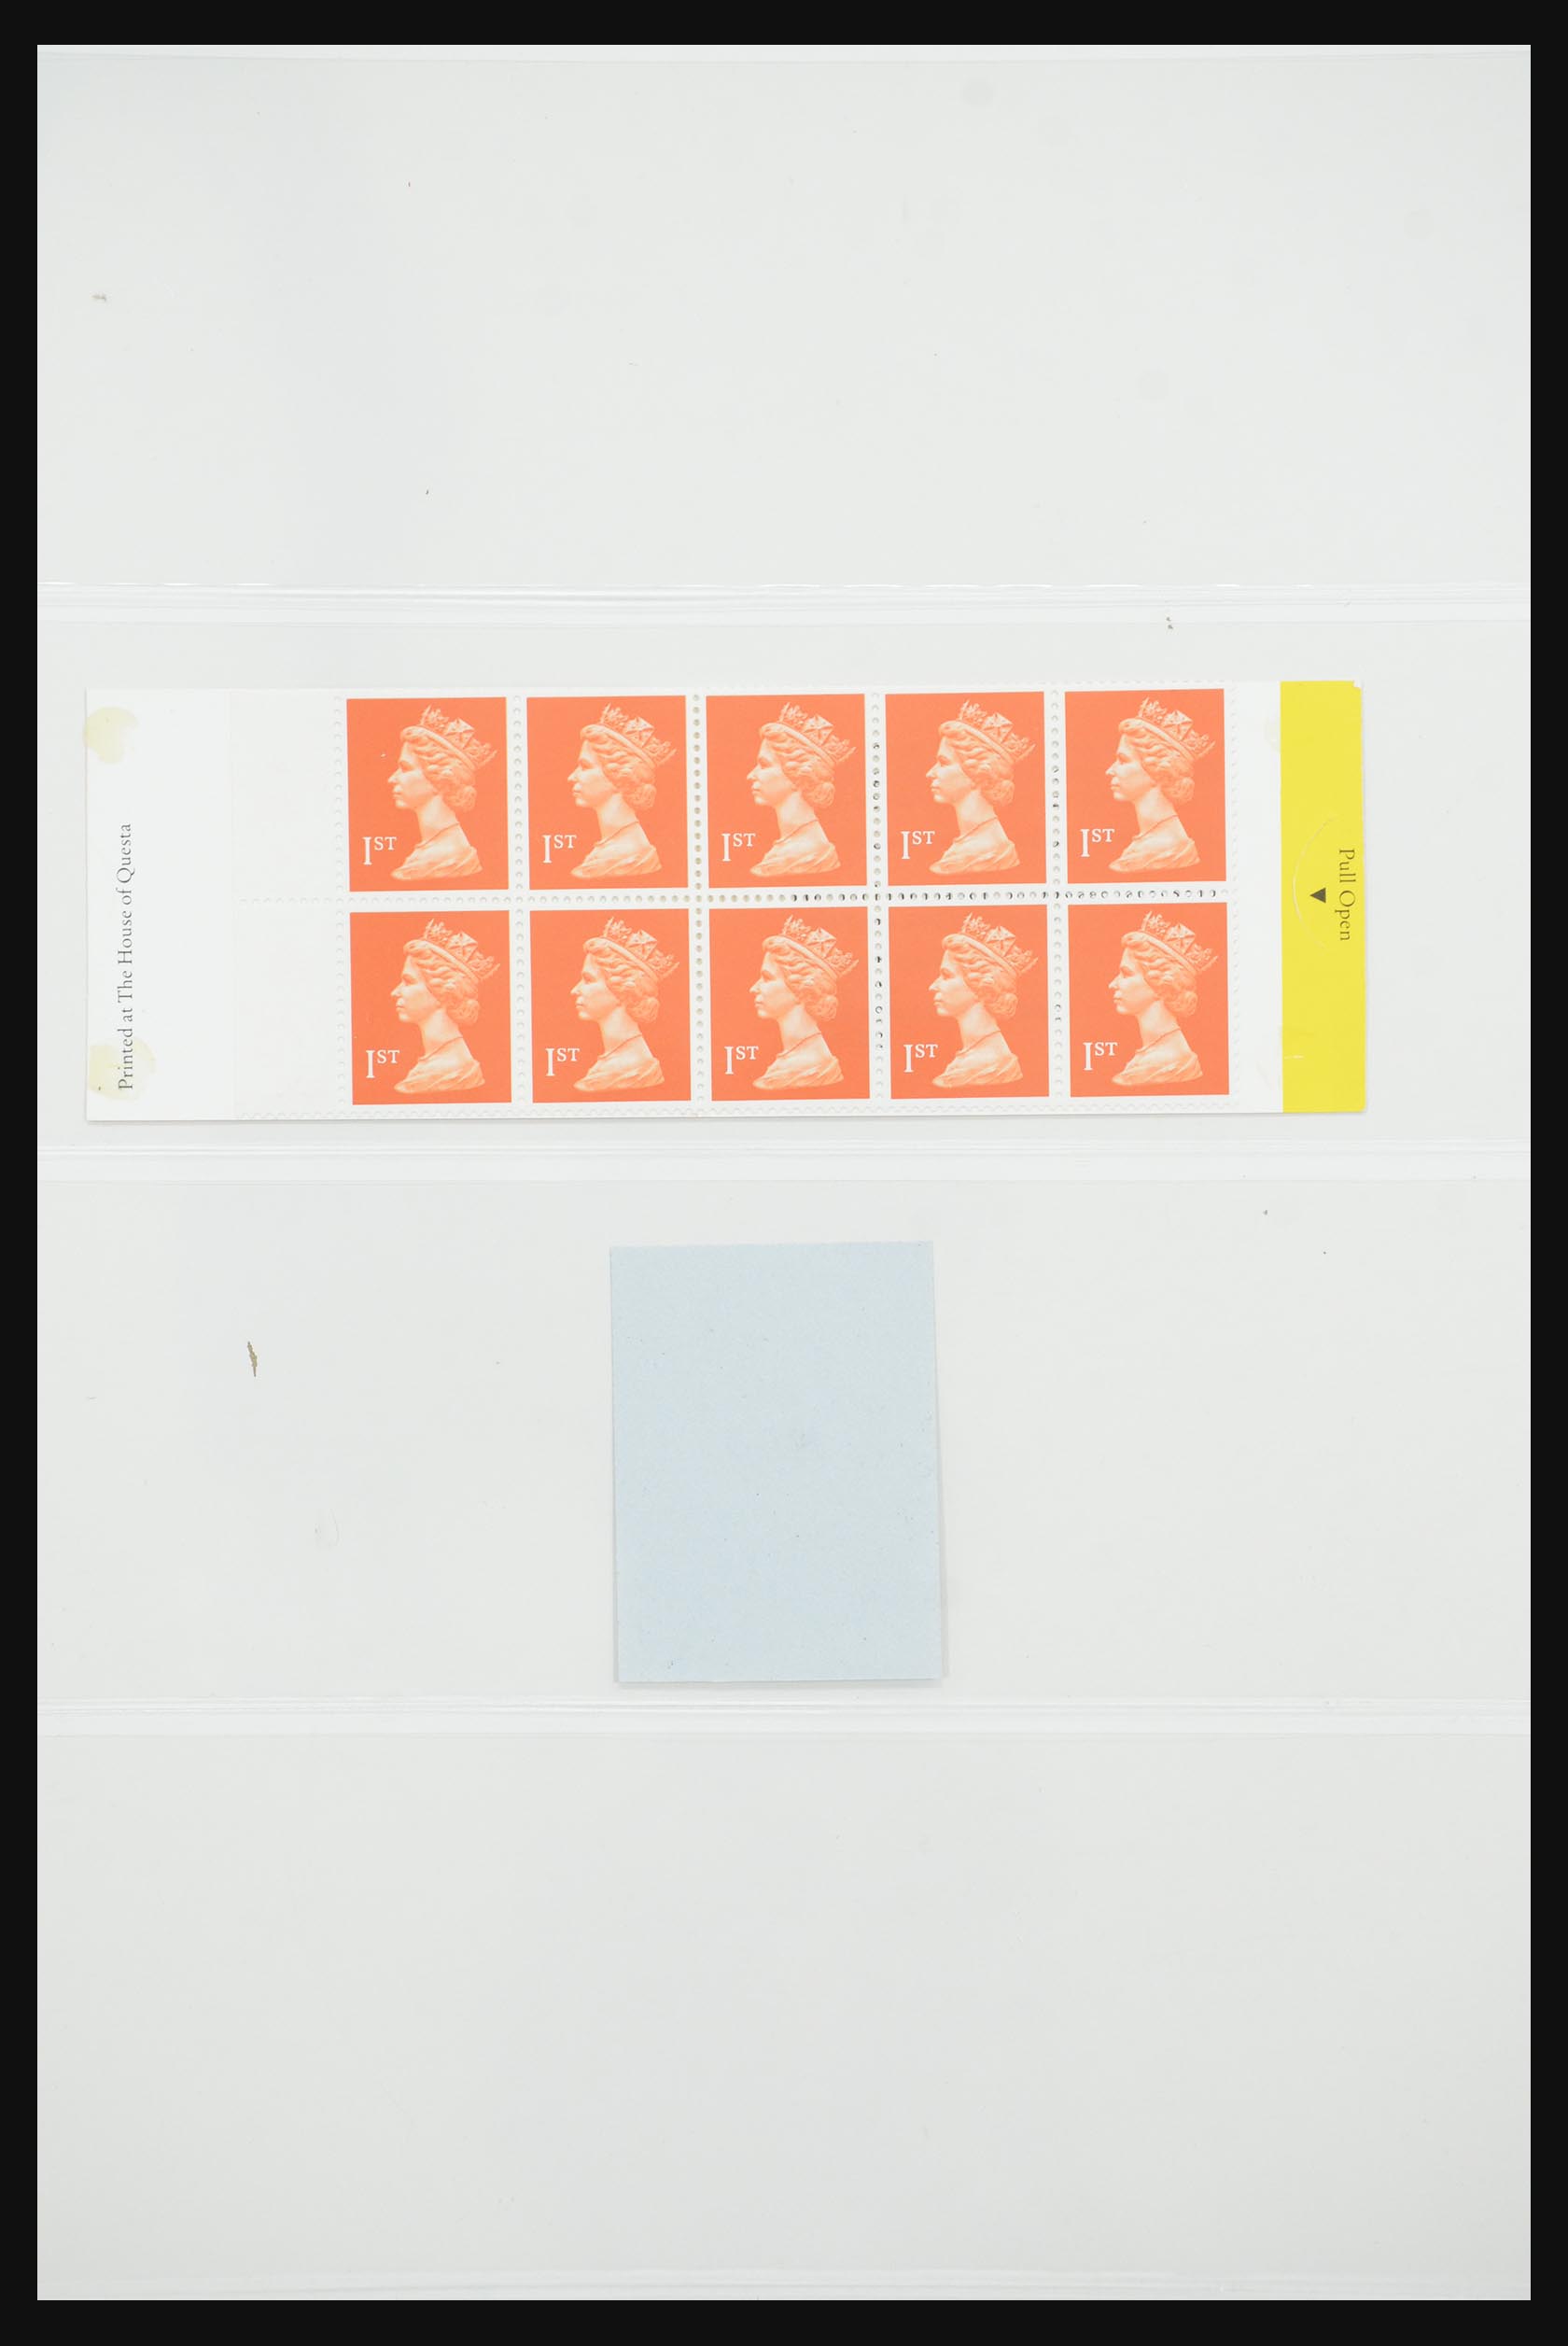 31960 100 - 31960 Great Britain stampbooklets 1989-2000.